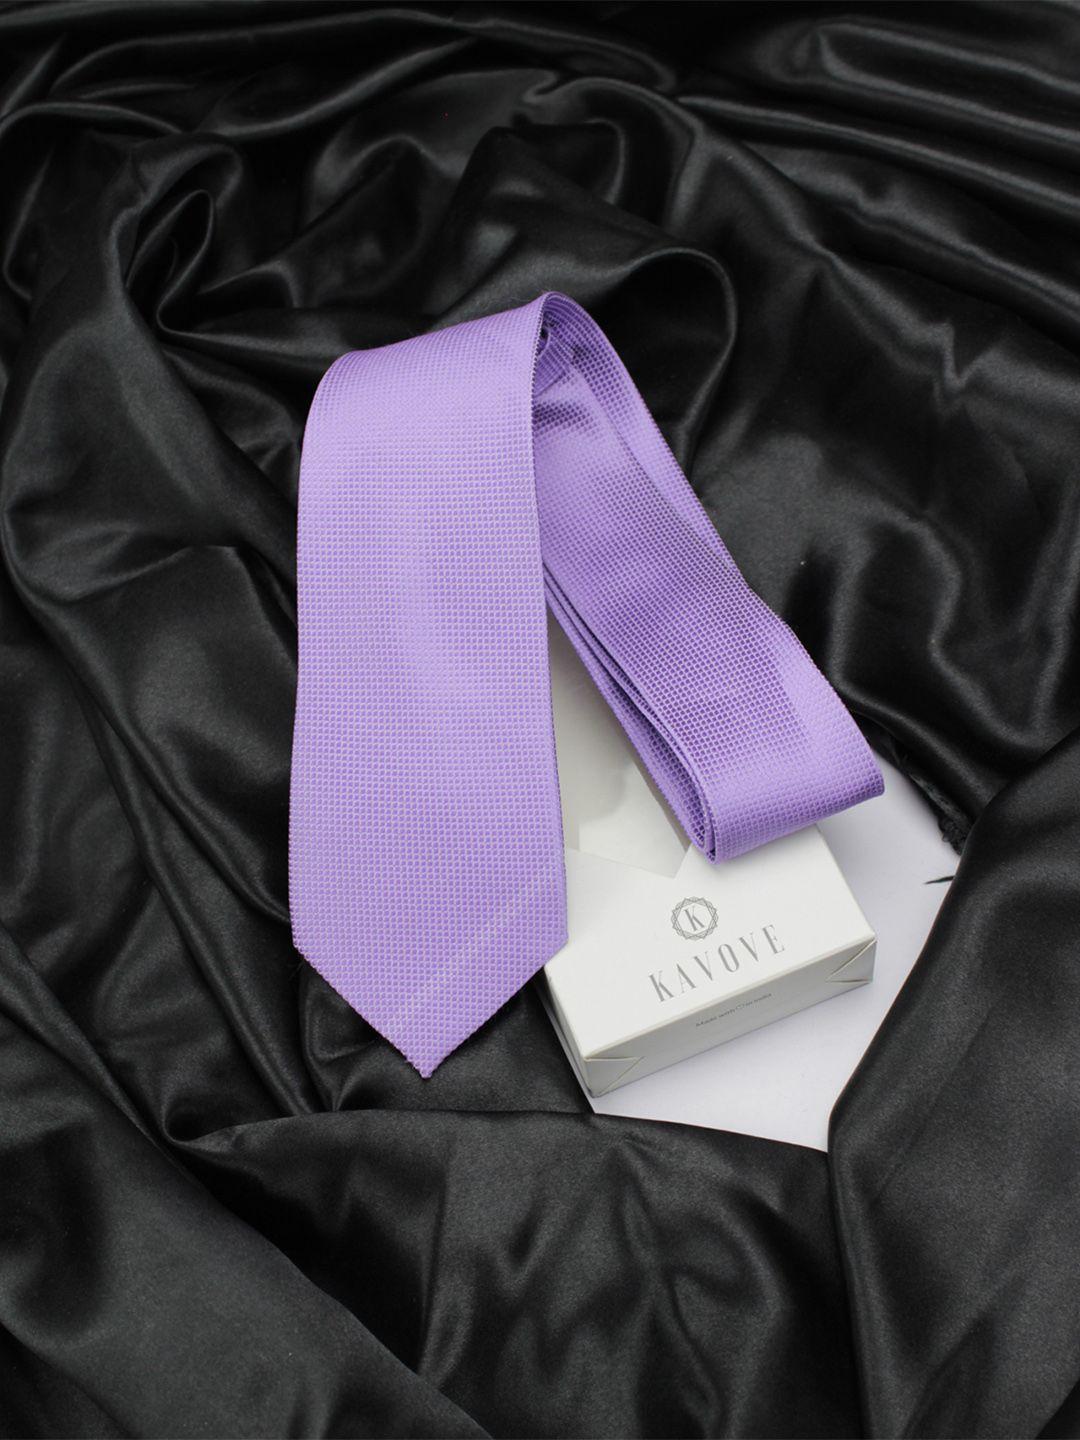 kovove men purple woven design broad tie